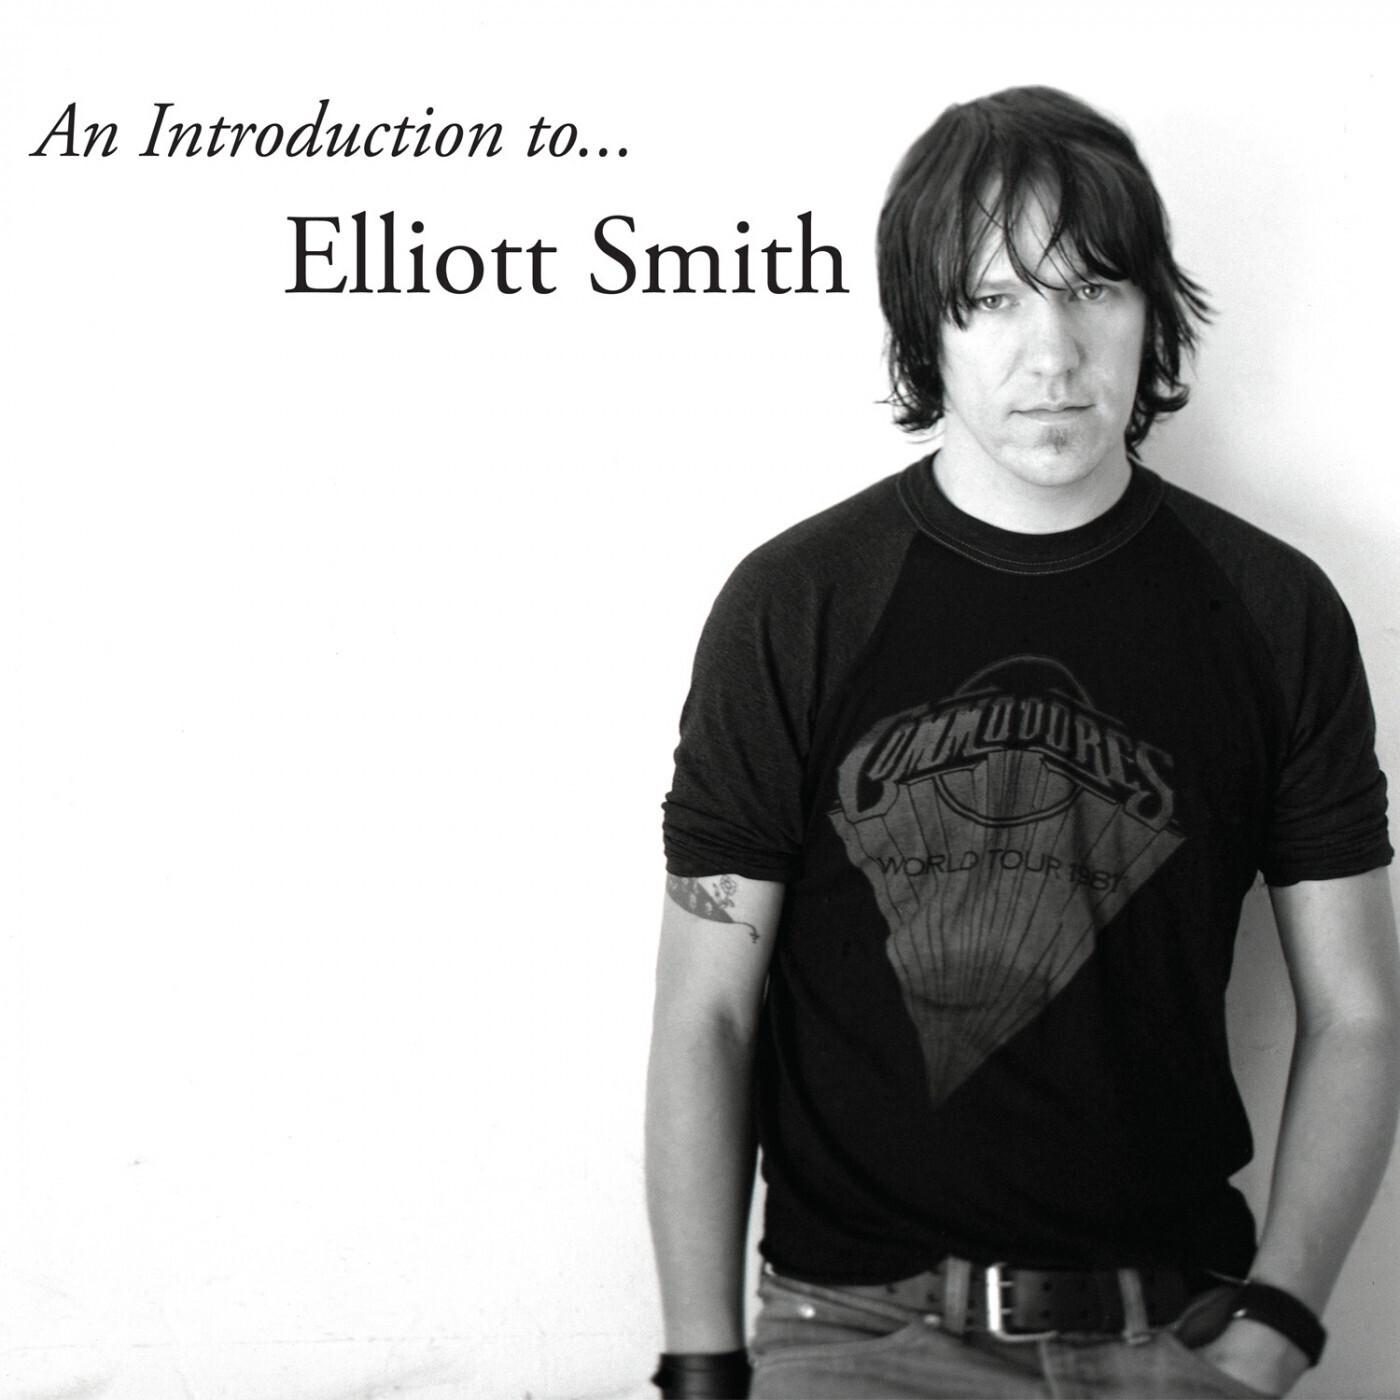 Elliott Smith "An Introduction to..."